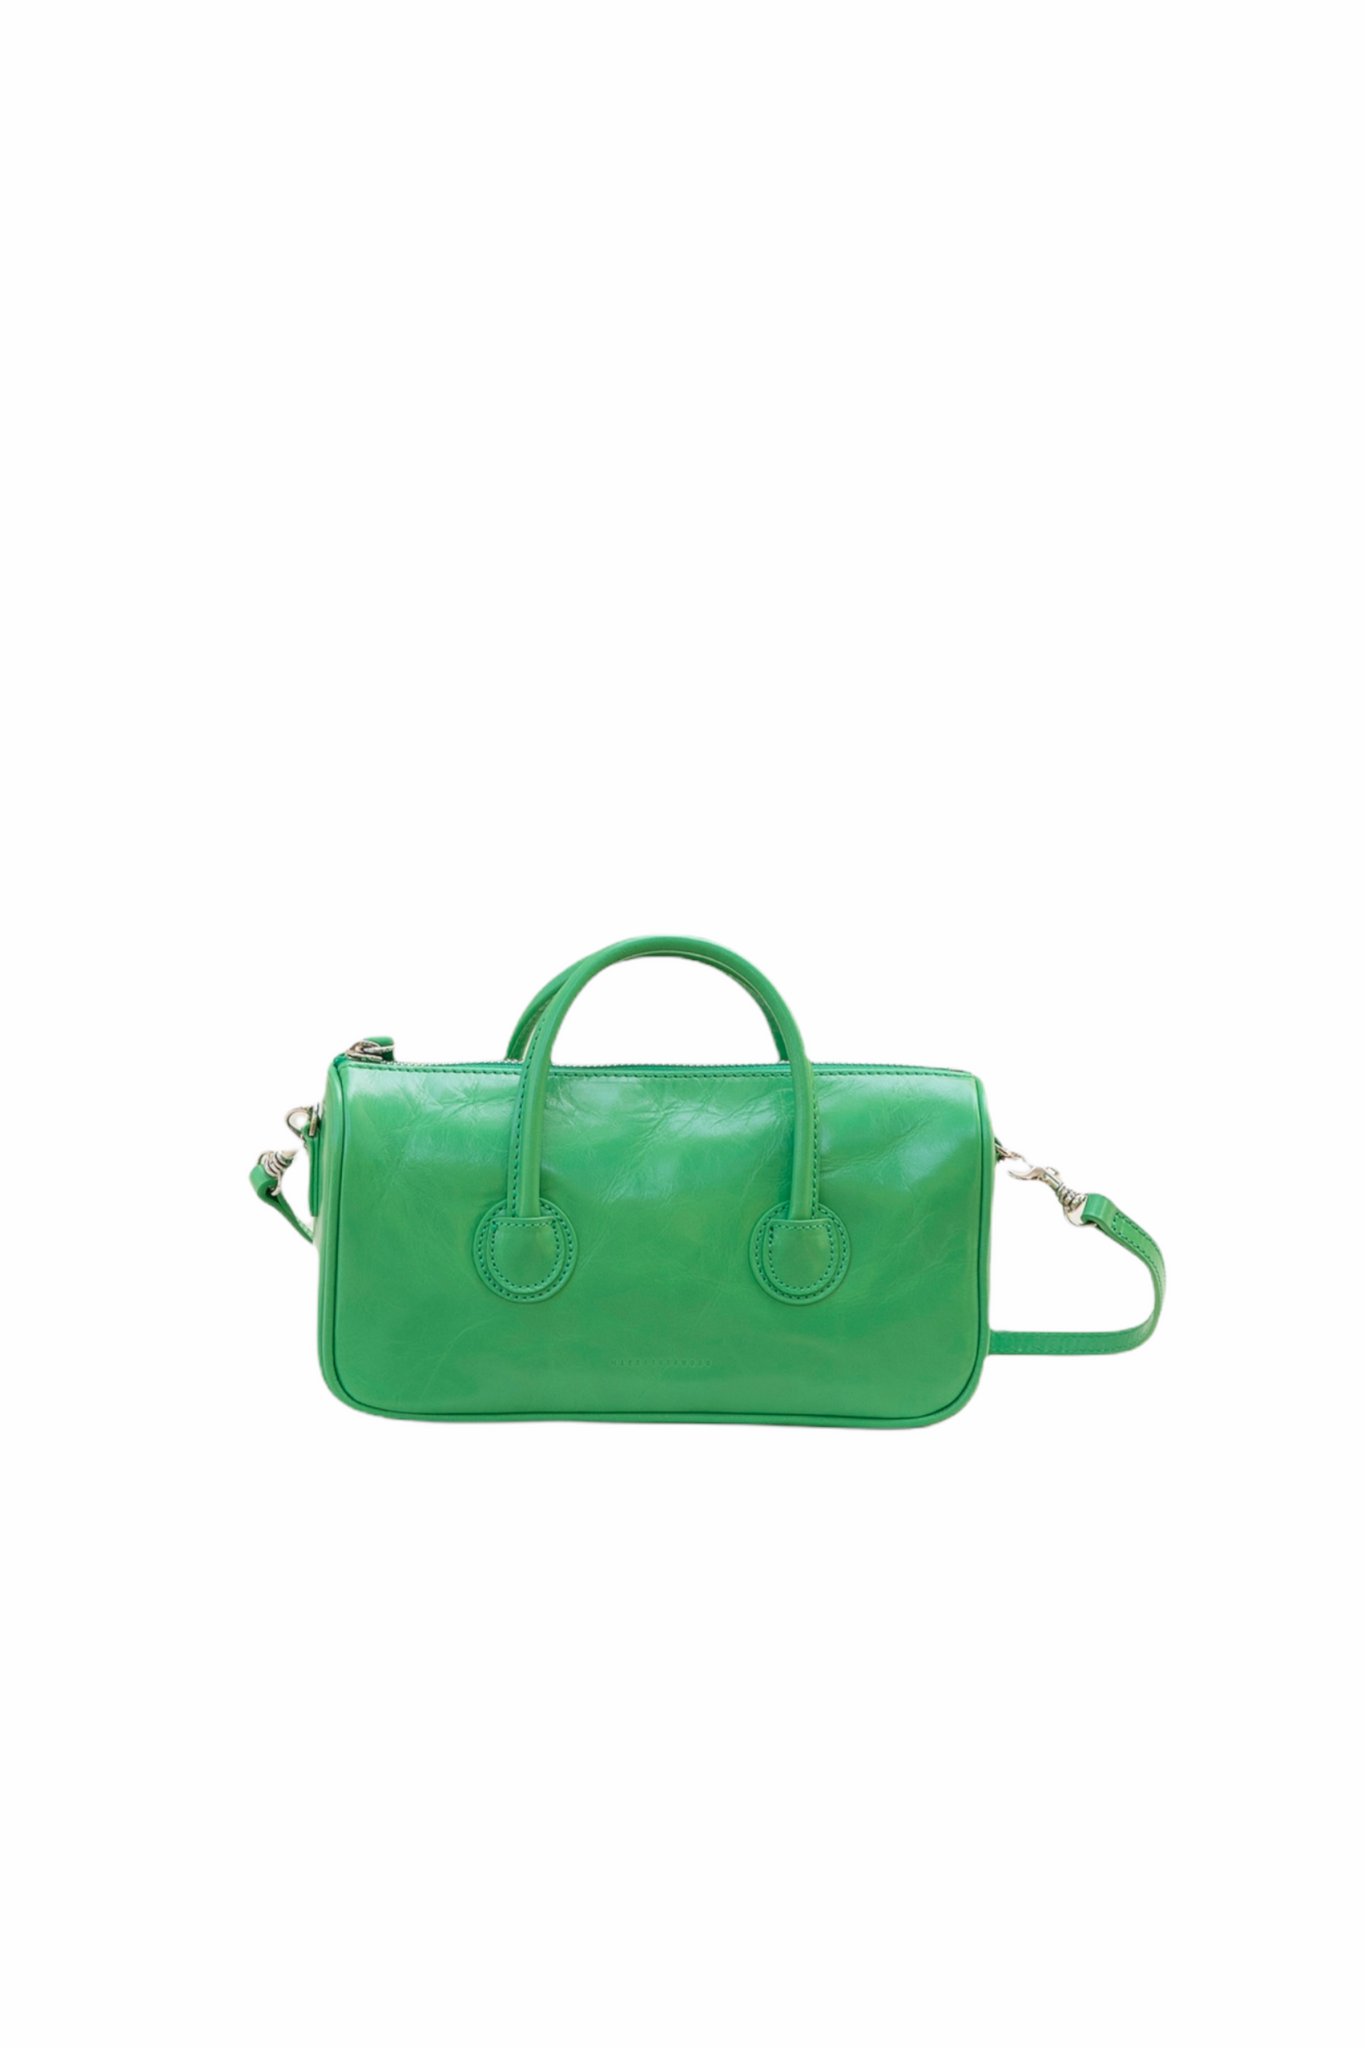 SMALL ZIPPER BAG IN MINT GREEN BY MARGESHERWOOD – Jowa.shop